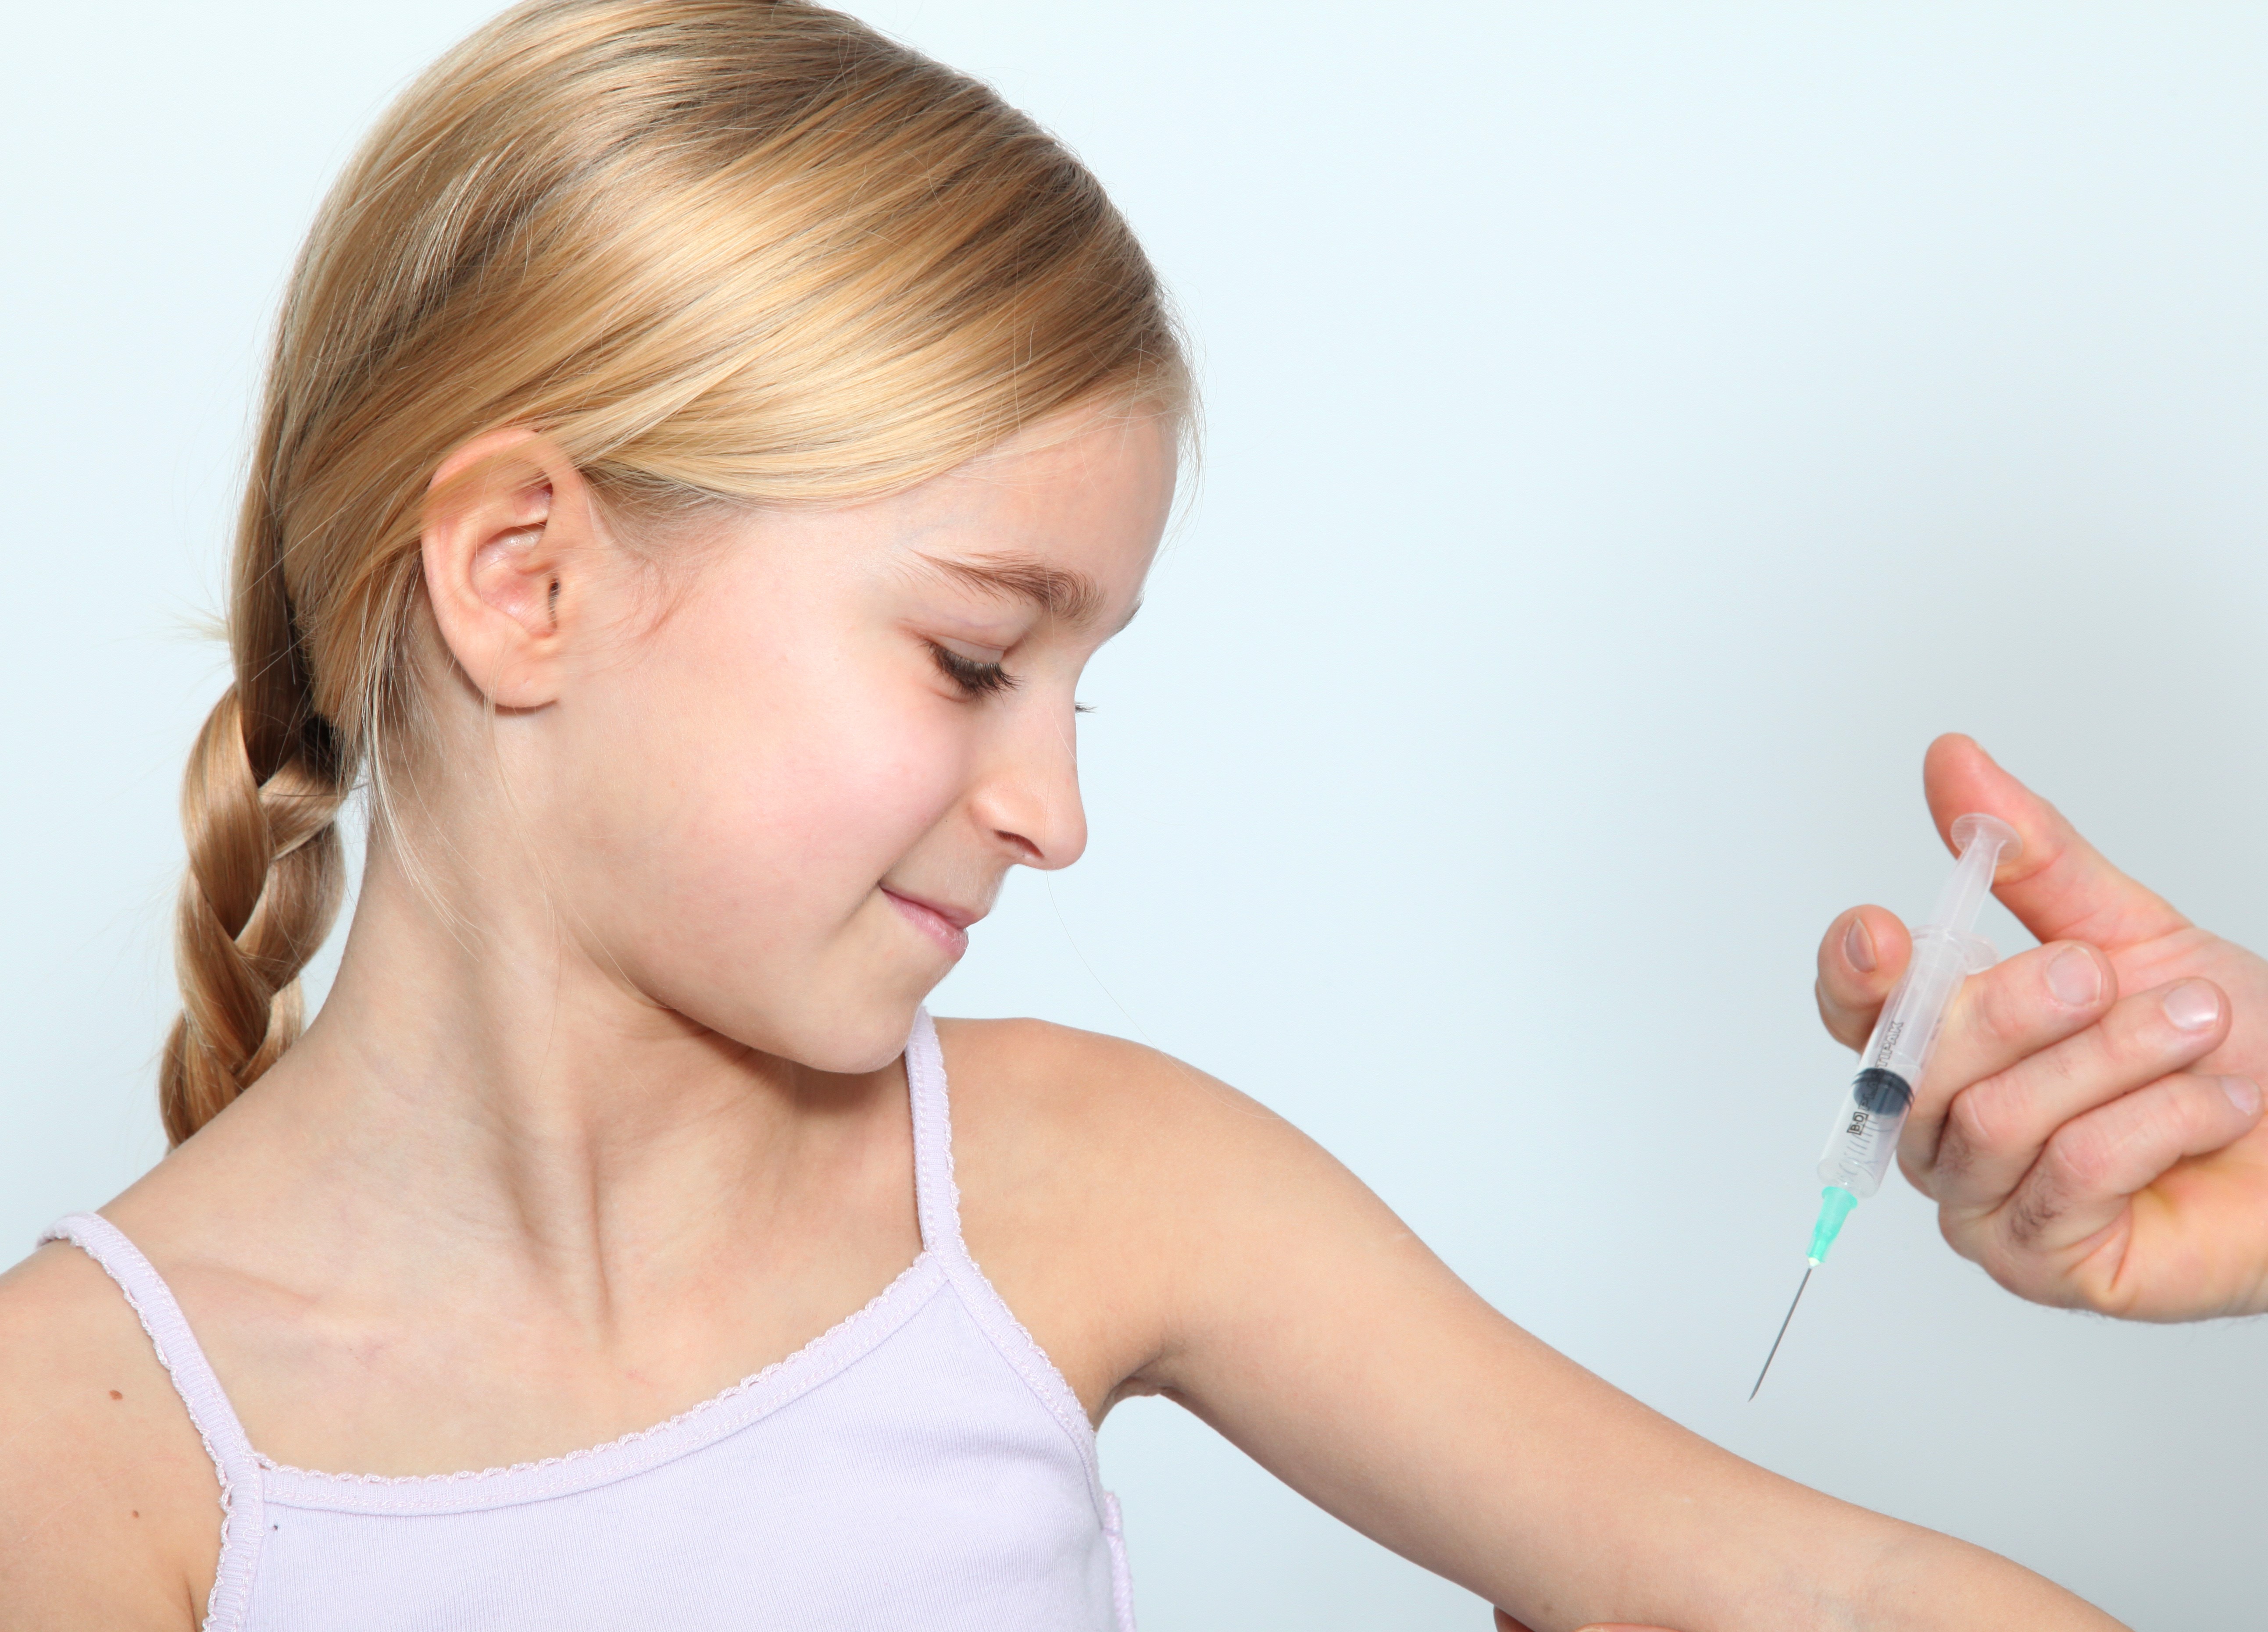 Child Vaccination